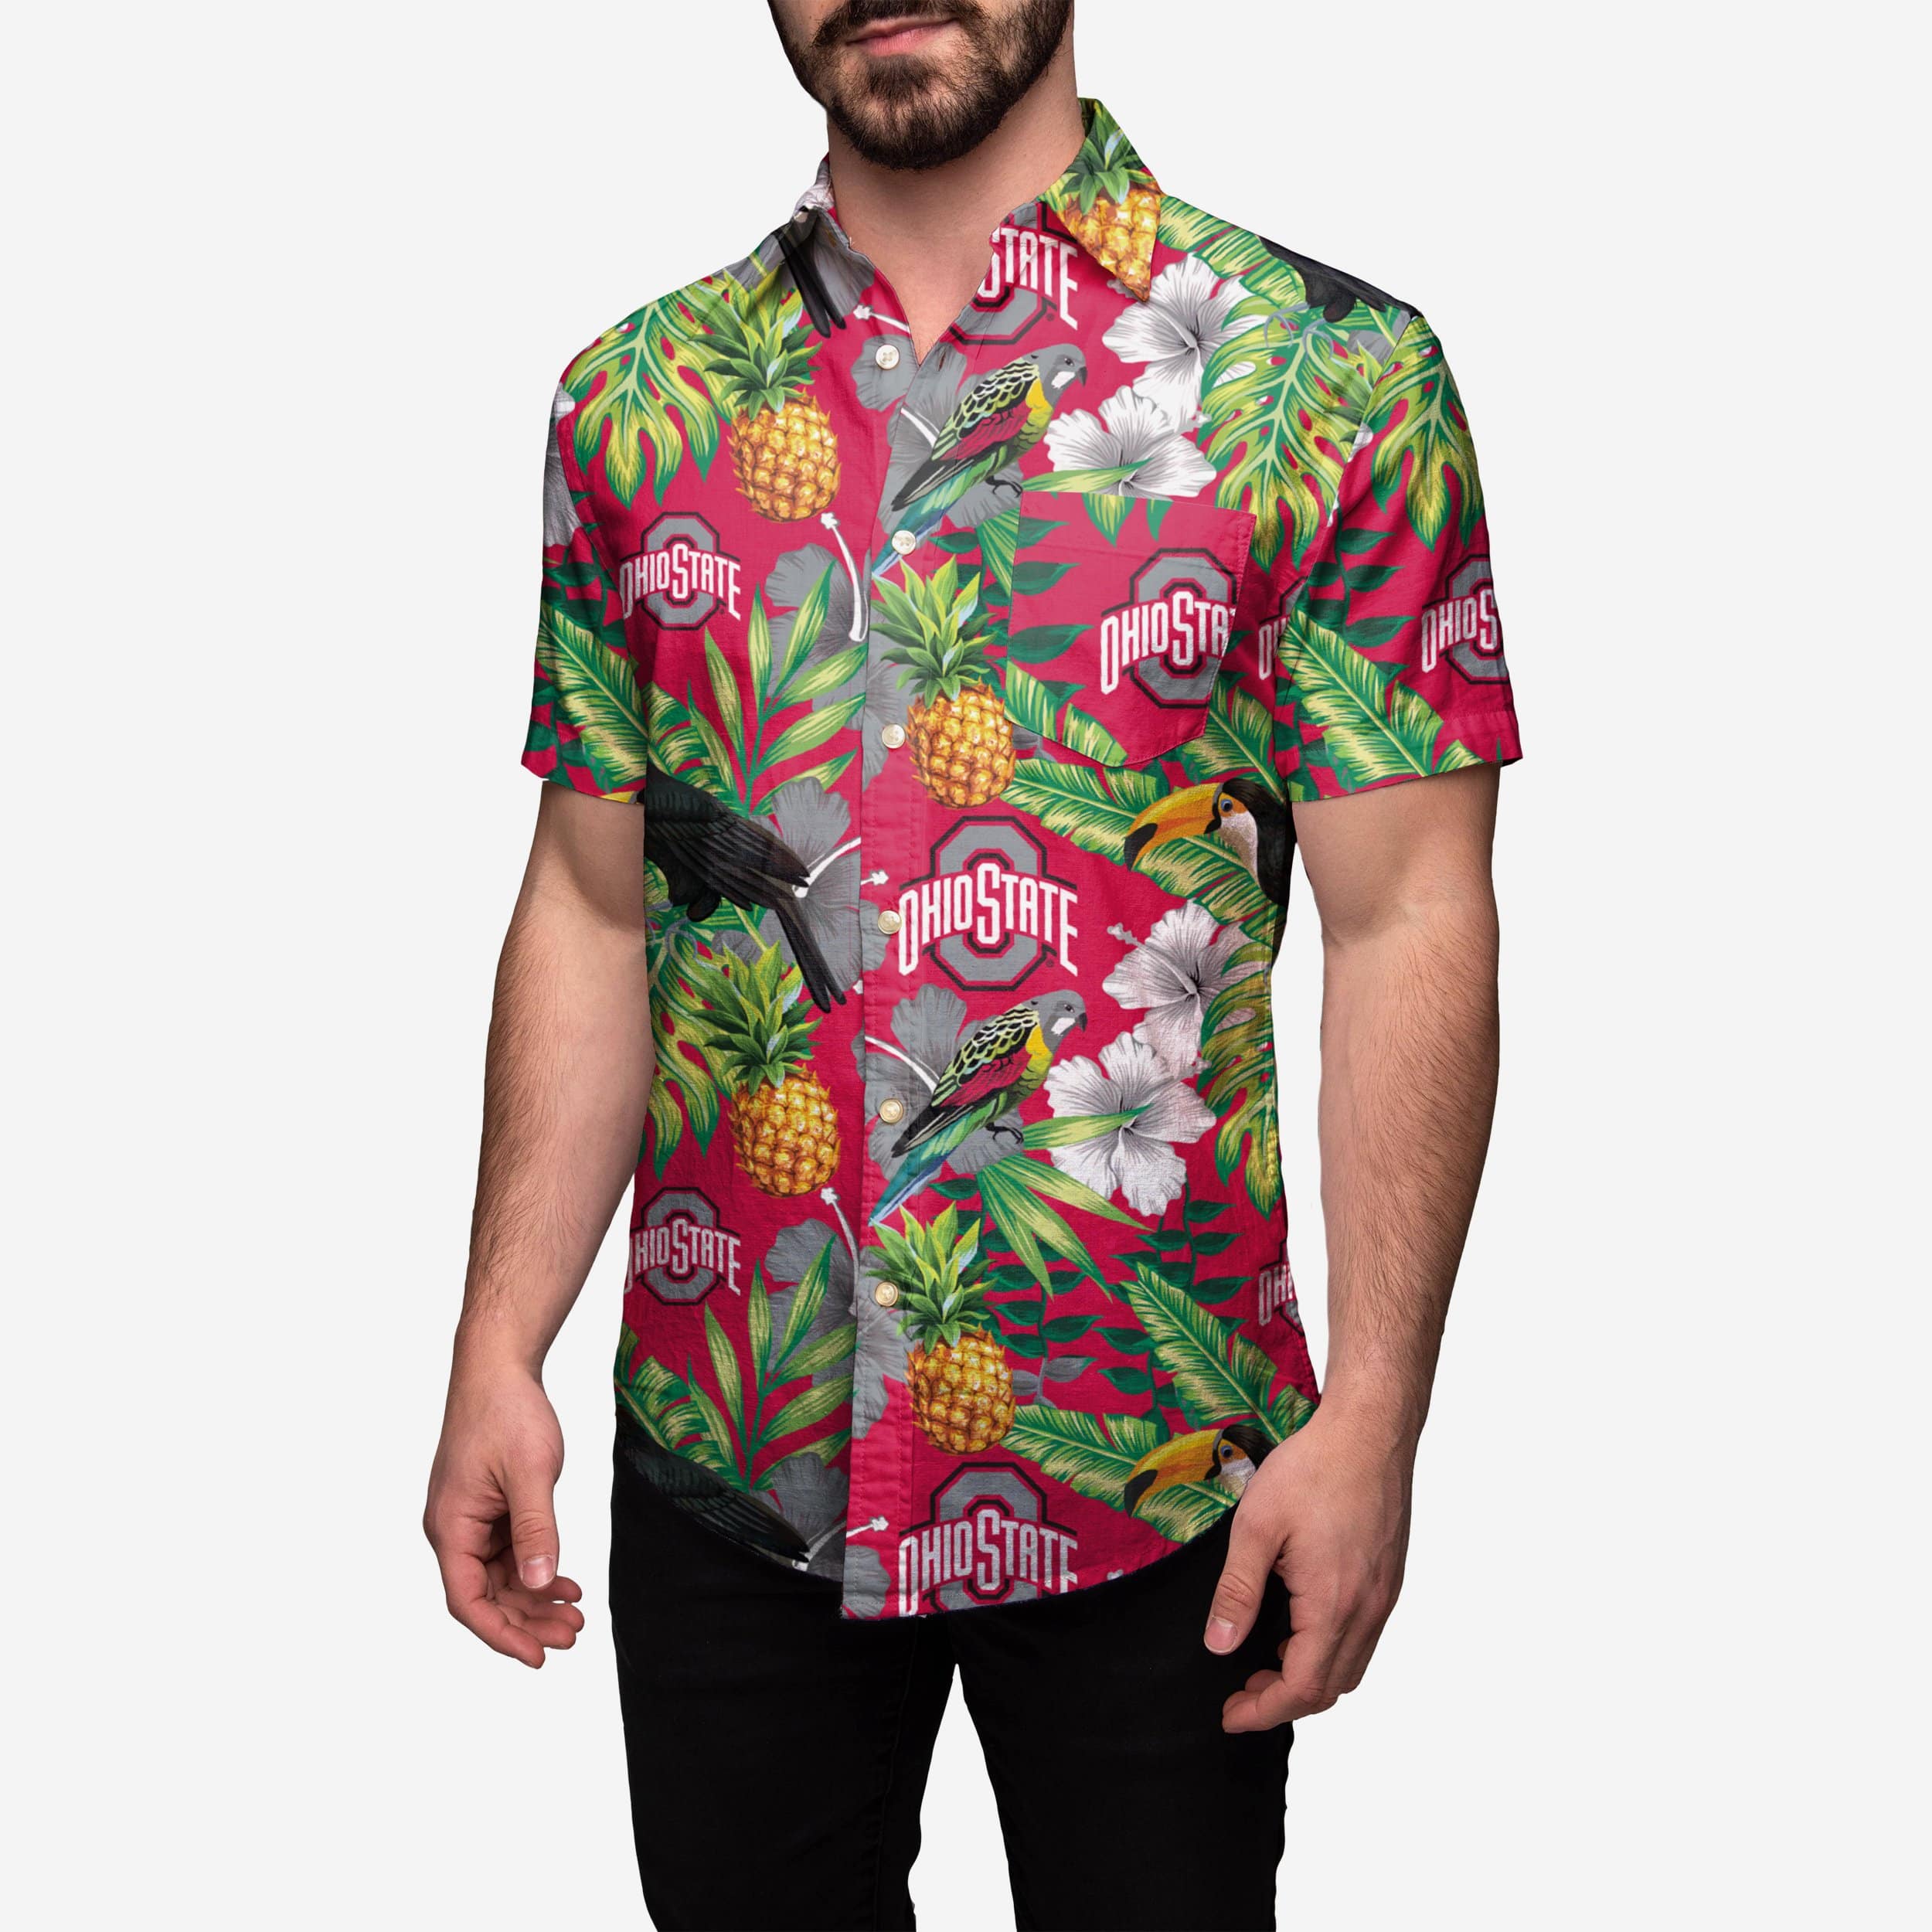 FOCO Ohio State Buckeyes Floral Button Up Shirt - XL - Men